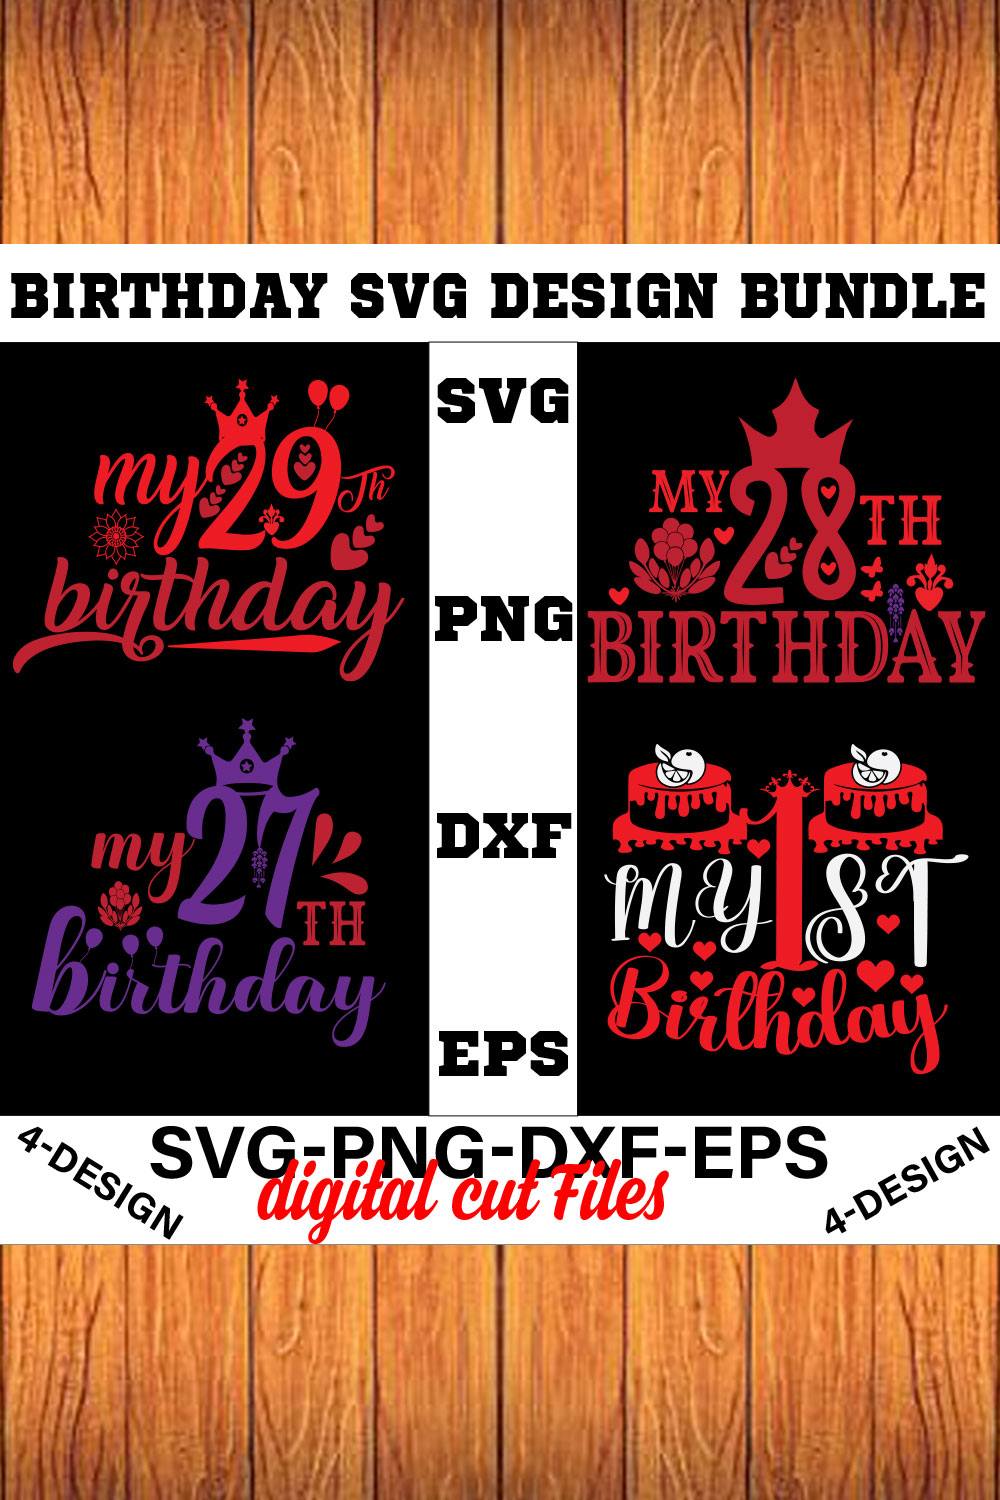 birthday svg design bundle Happy birthday svg bundle hand lettered birthday svg birthday party svg Volume-24 pinterest preview image.